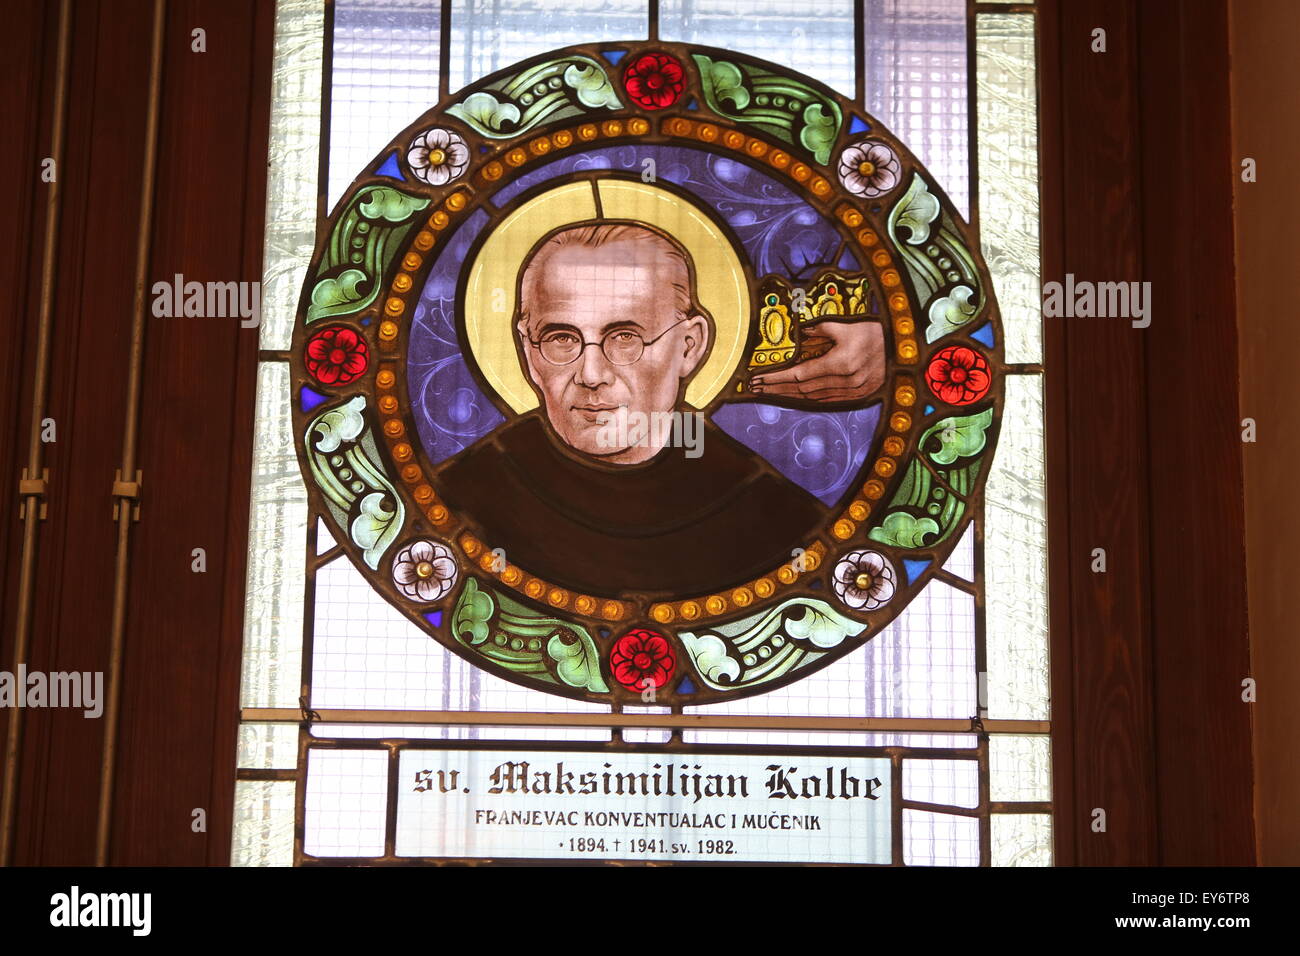 Maximilian Kolbe, stained glass window in Basilica Assumption of the Virgin Mary in Marija Bistrica, Croatia, on July 14, 2014 Stock Photo